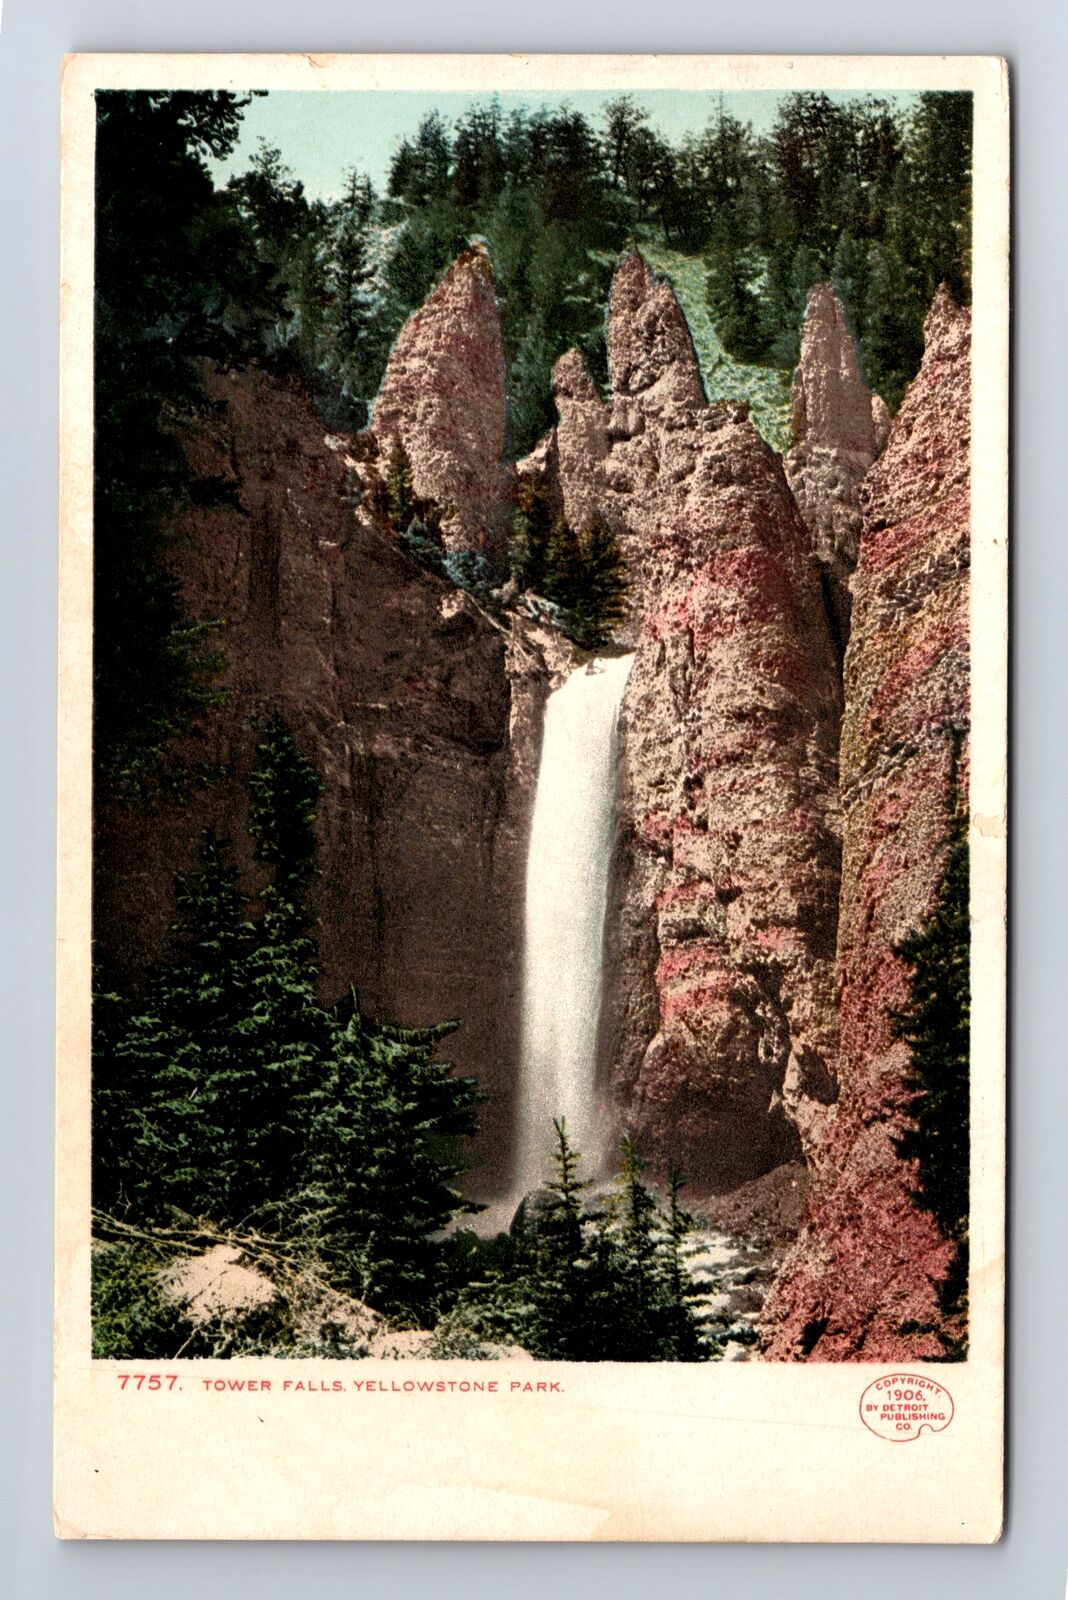 Yellowstone National Park, Tower Falls, Series #7757, Vintage Postcard